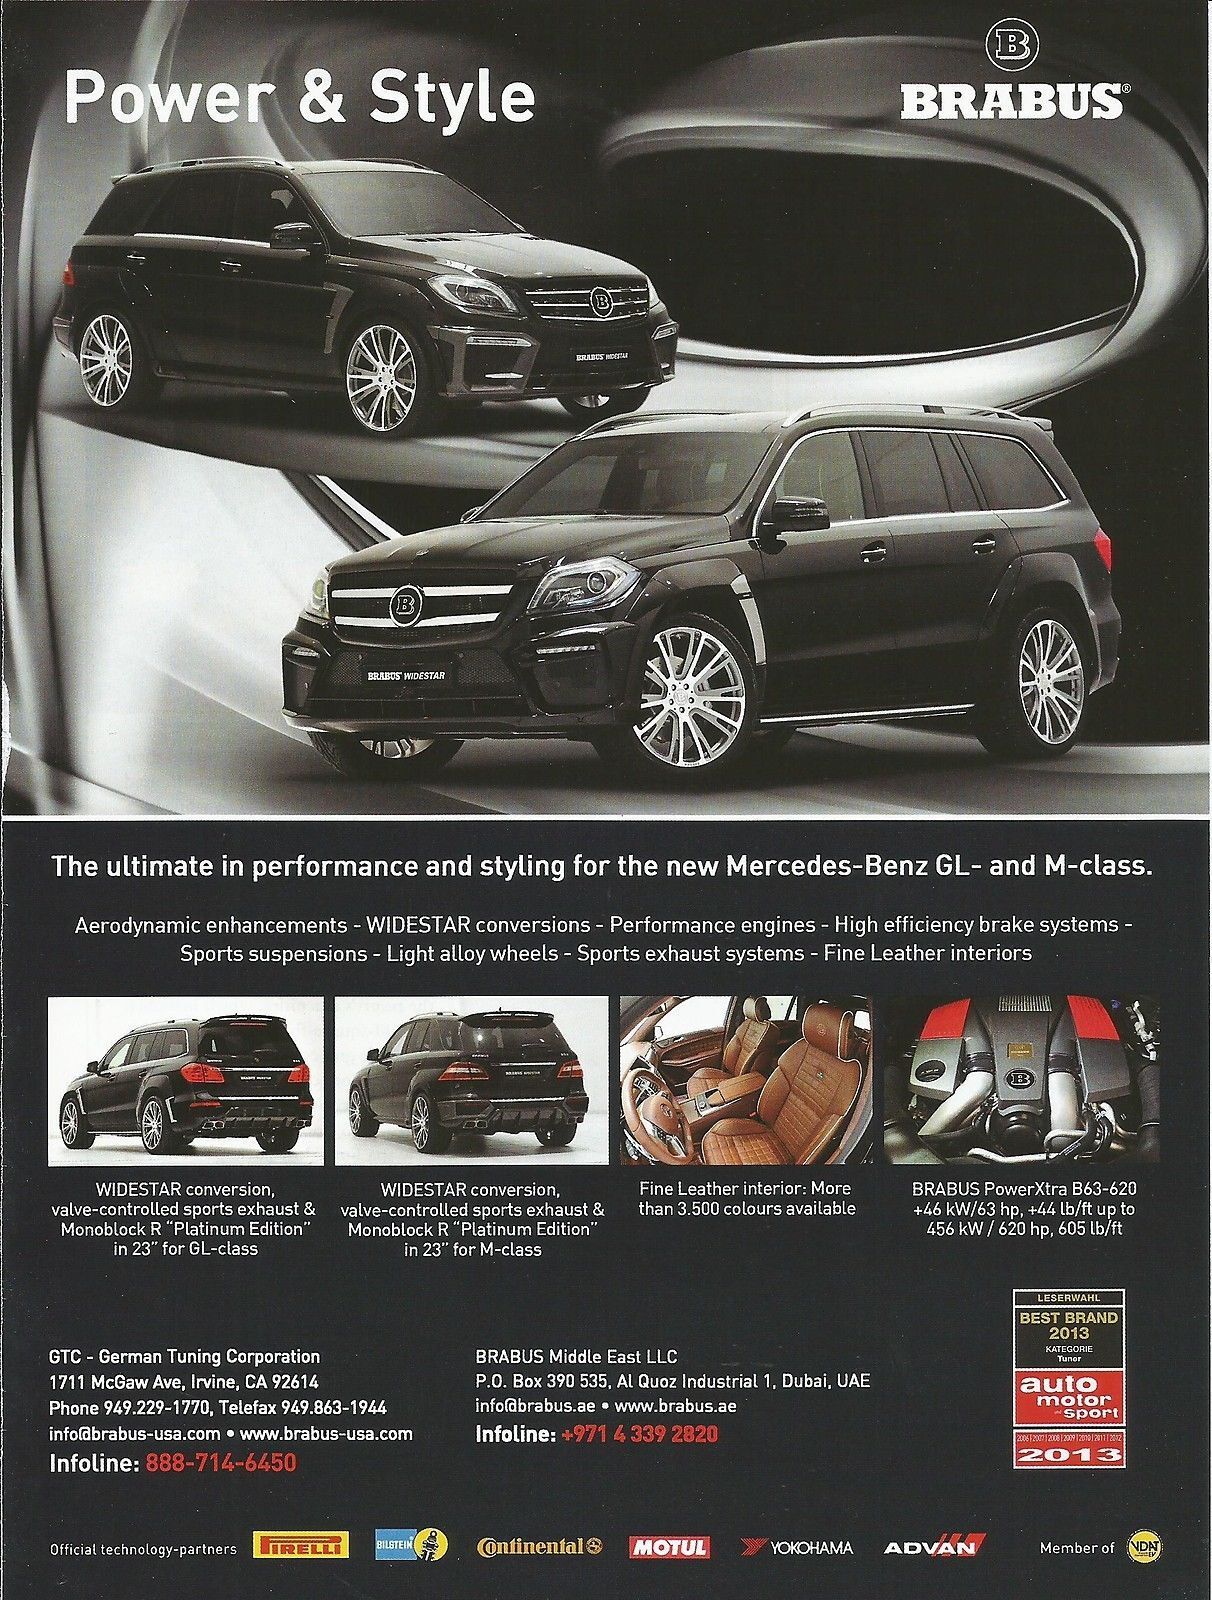 BRABUS Power & Style - 2013  Print Ad